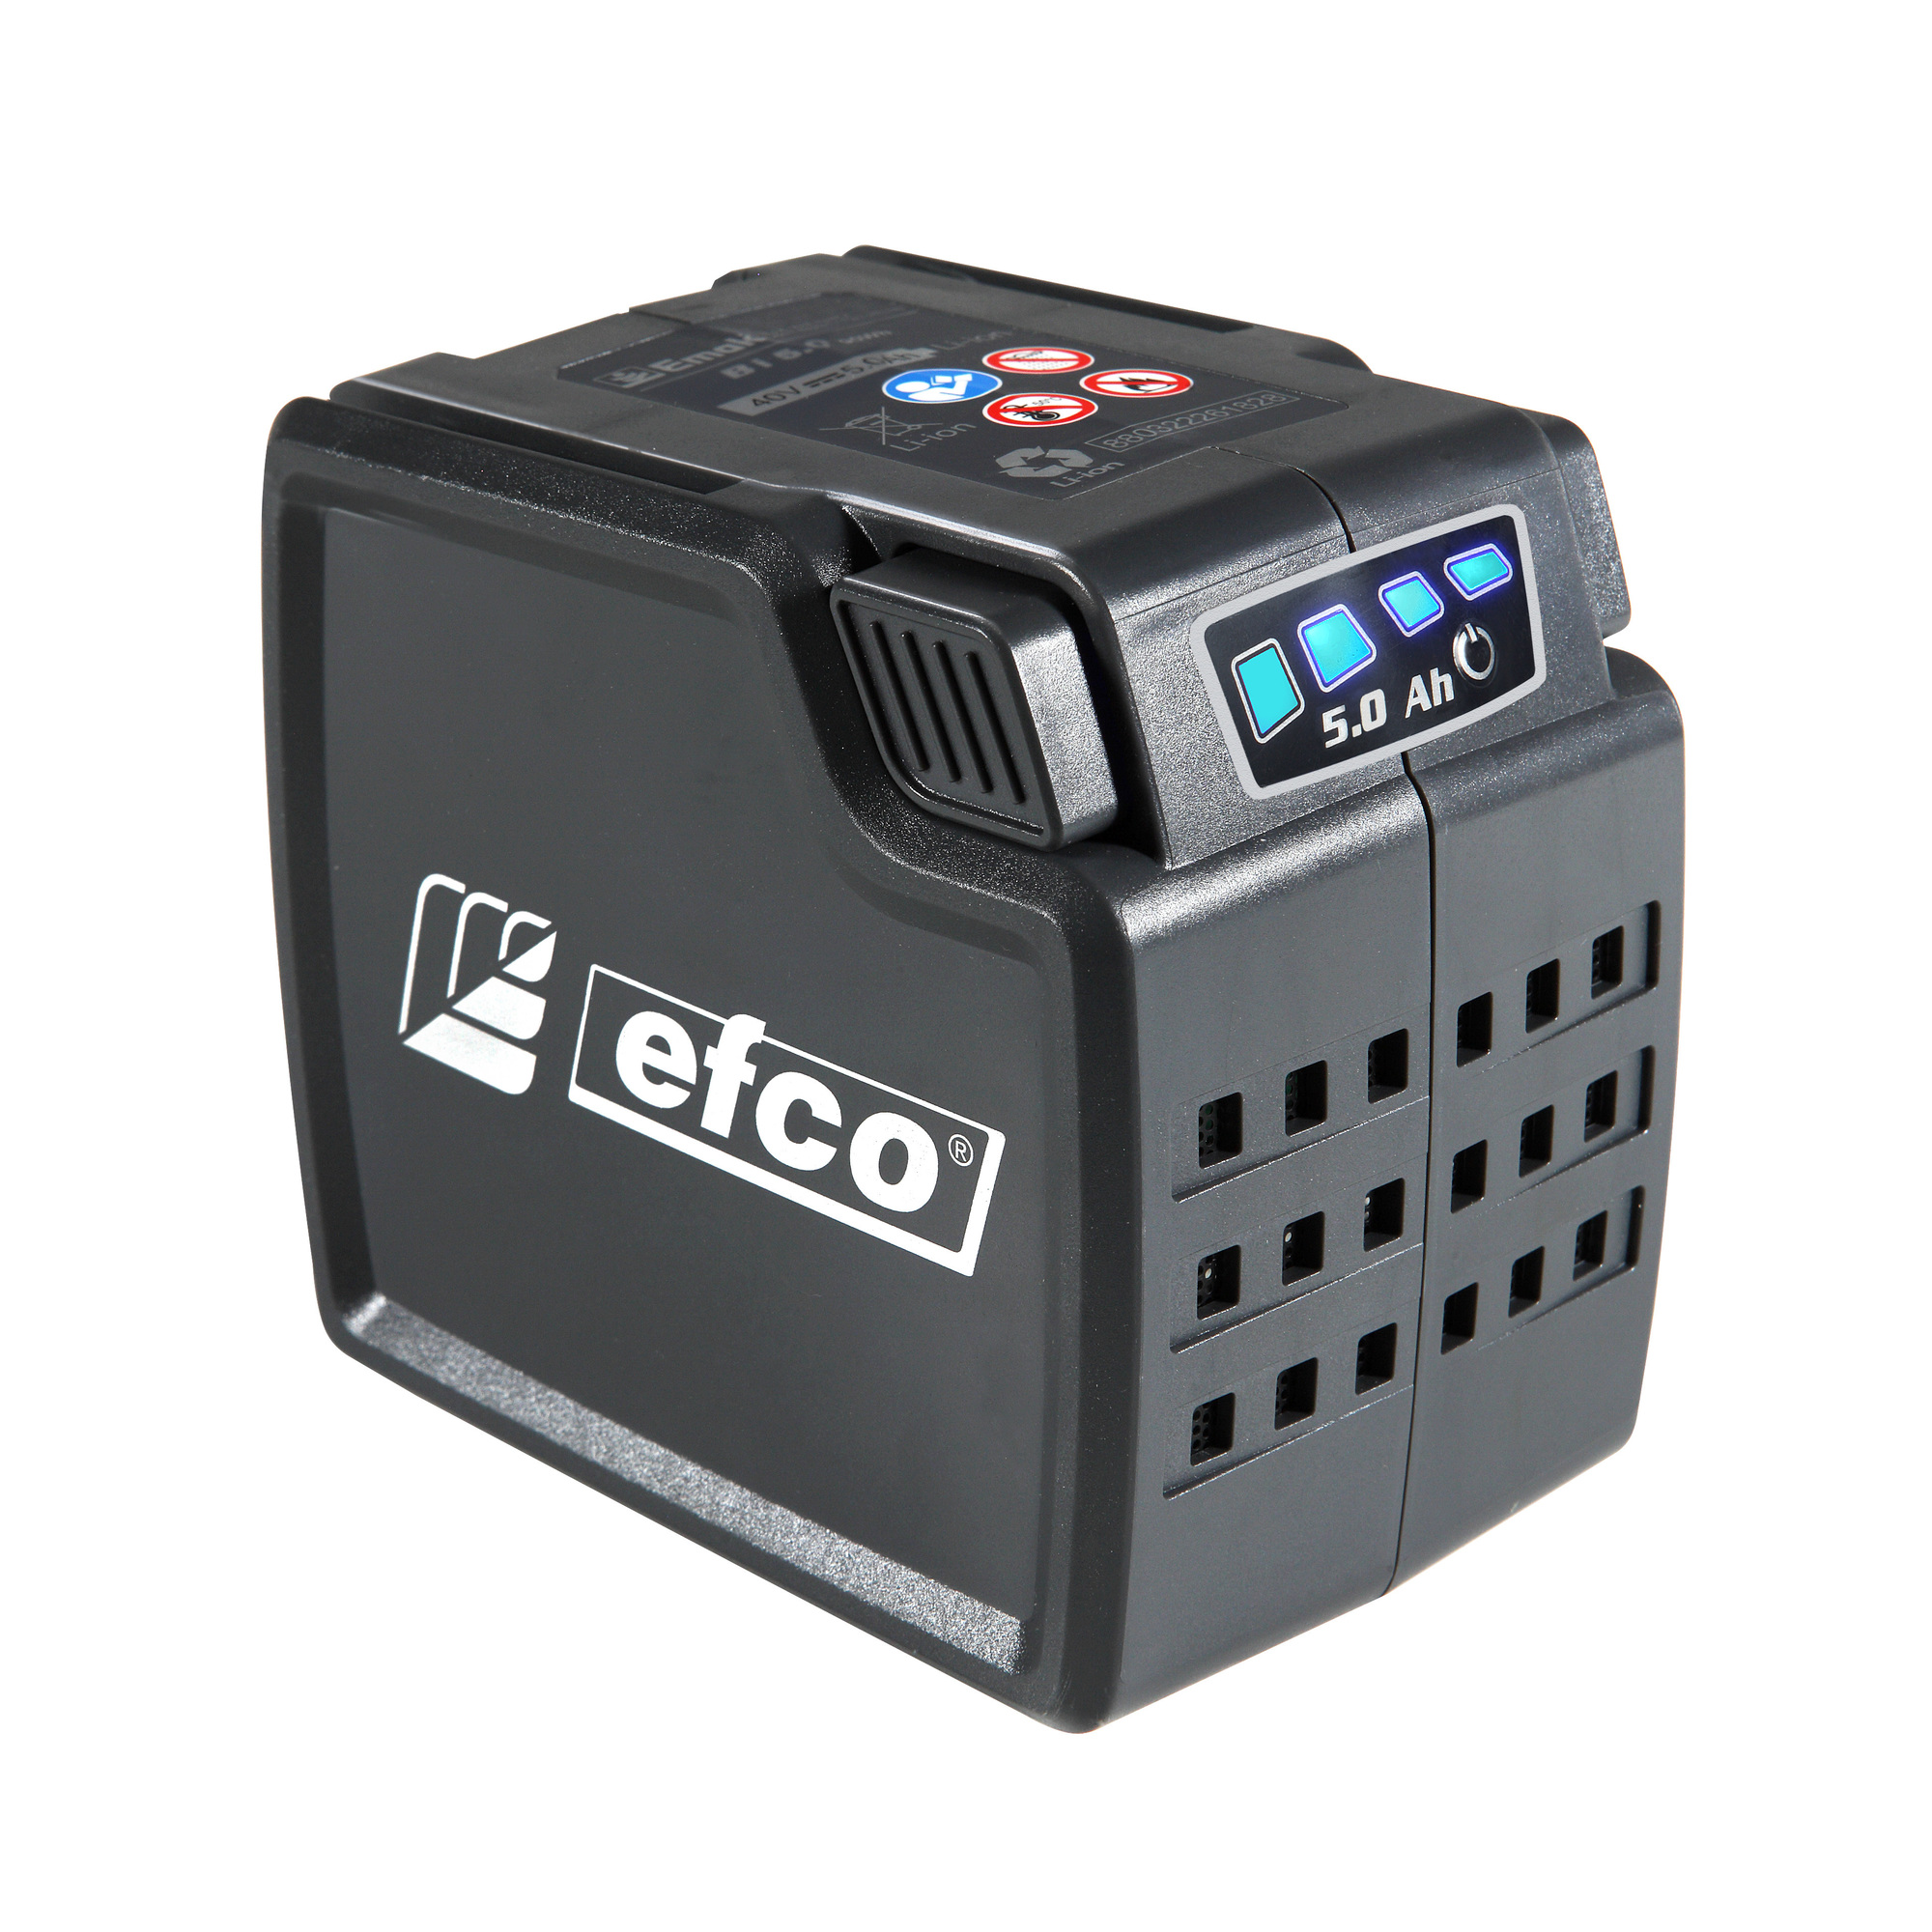 Efco, 40V 5.0 Ah Lithium Ion Battery with LED Indicator, Volts 40, Battery Amp Hours 5, Model BI 5.0 EF -  54030024CUS